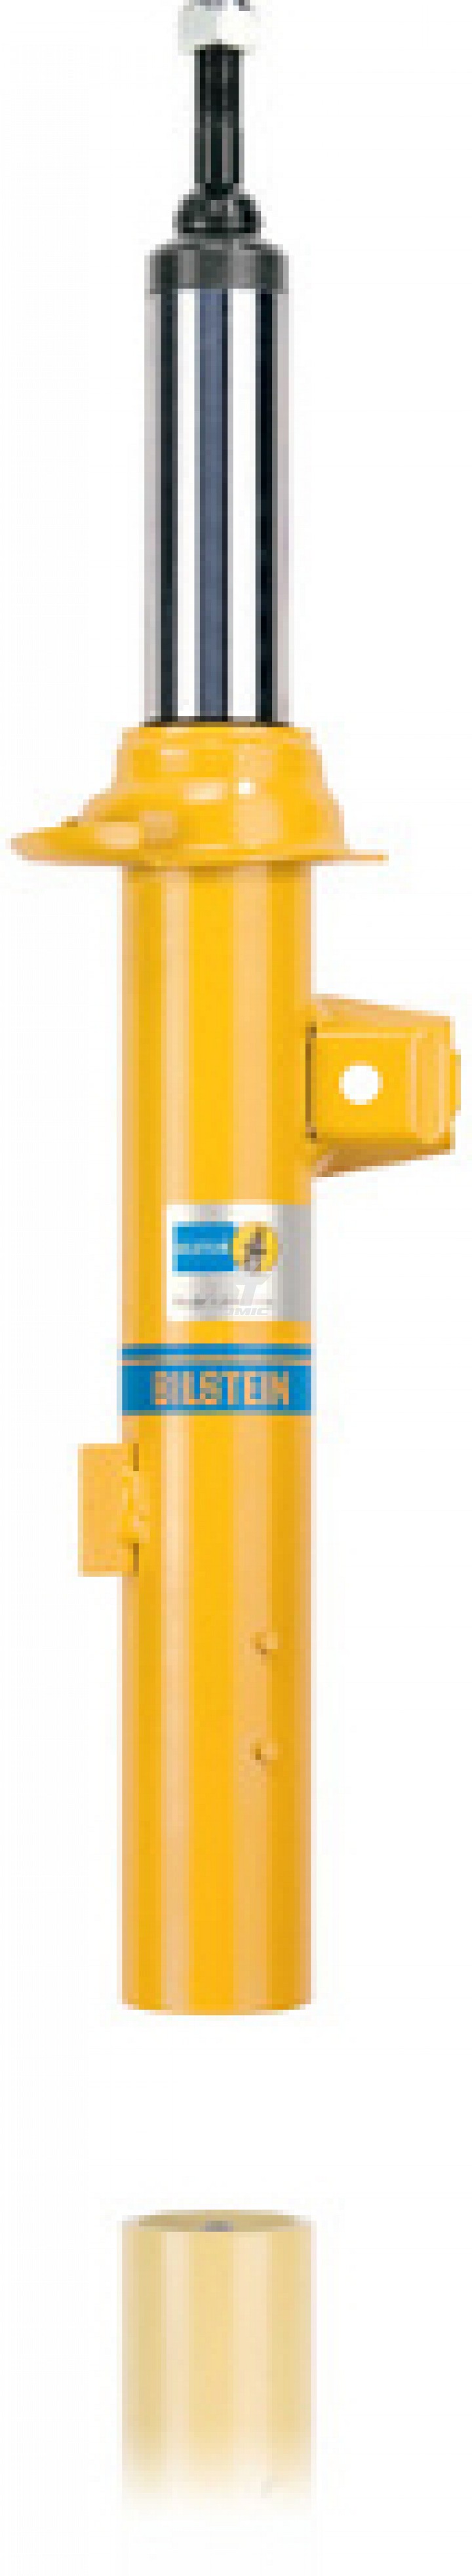 BILSTEIN 24-196499 Shock absorber front B8 TOYOTA FJ 0-2.5" lift 5100 Series, front